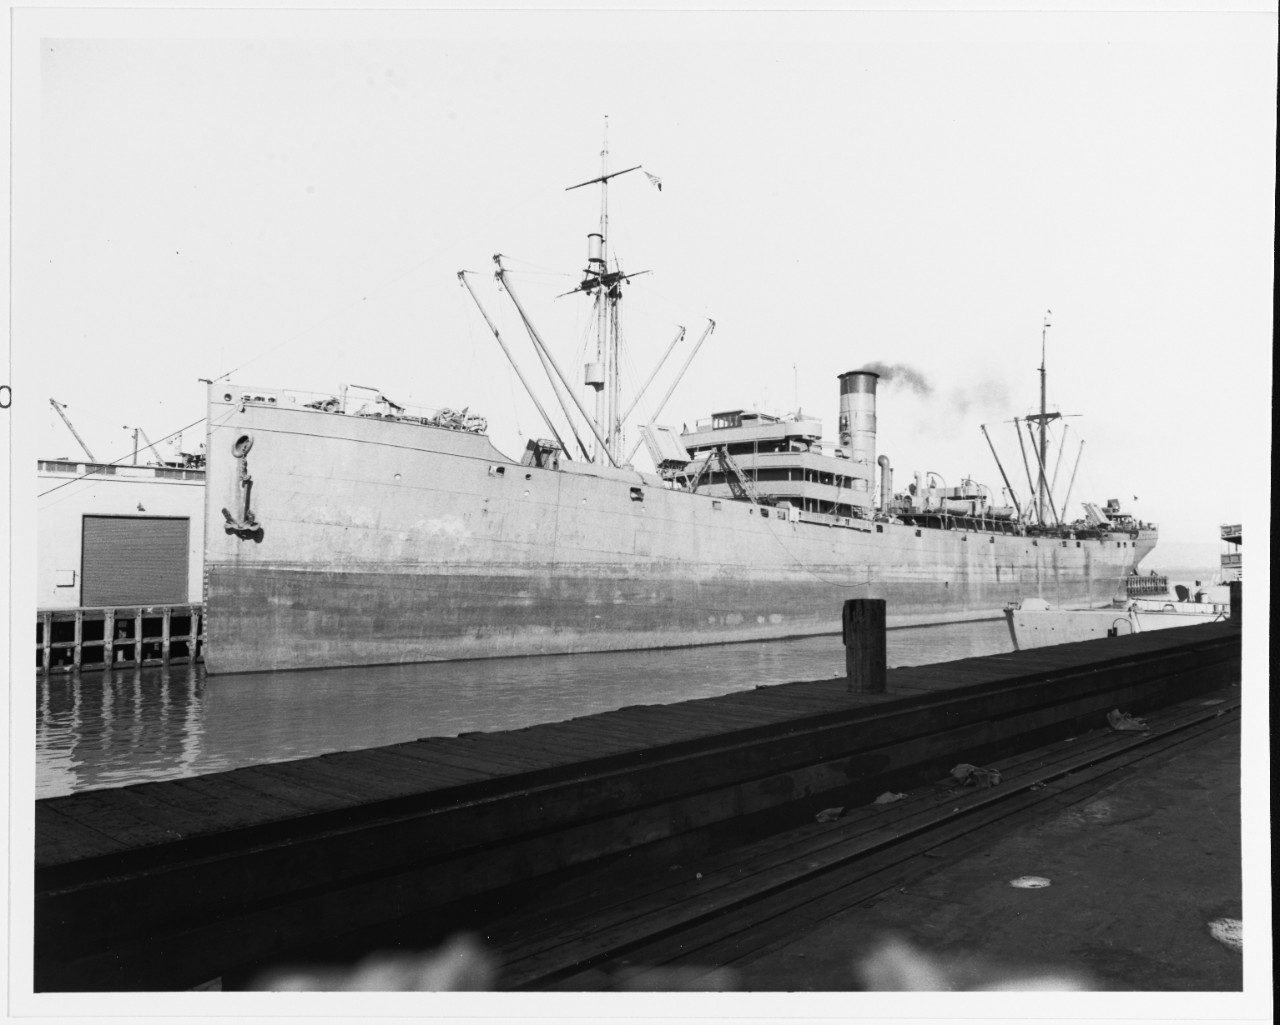 S.S. KULU (U.S.S.R. Merchant Cargo Ship, 1917-1960?)